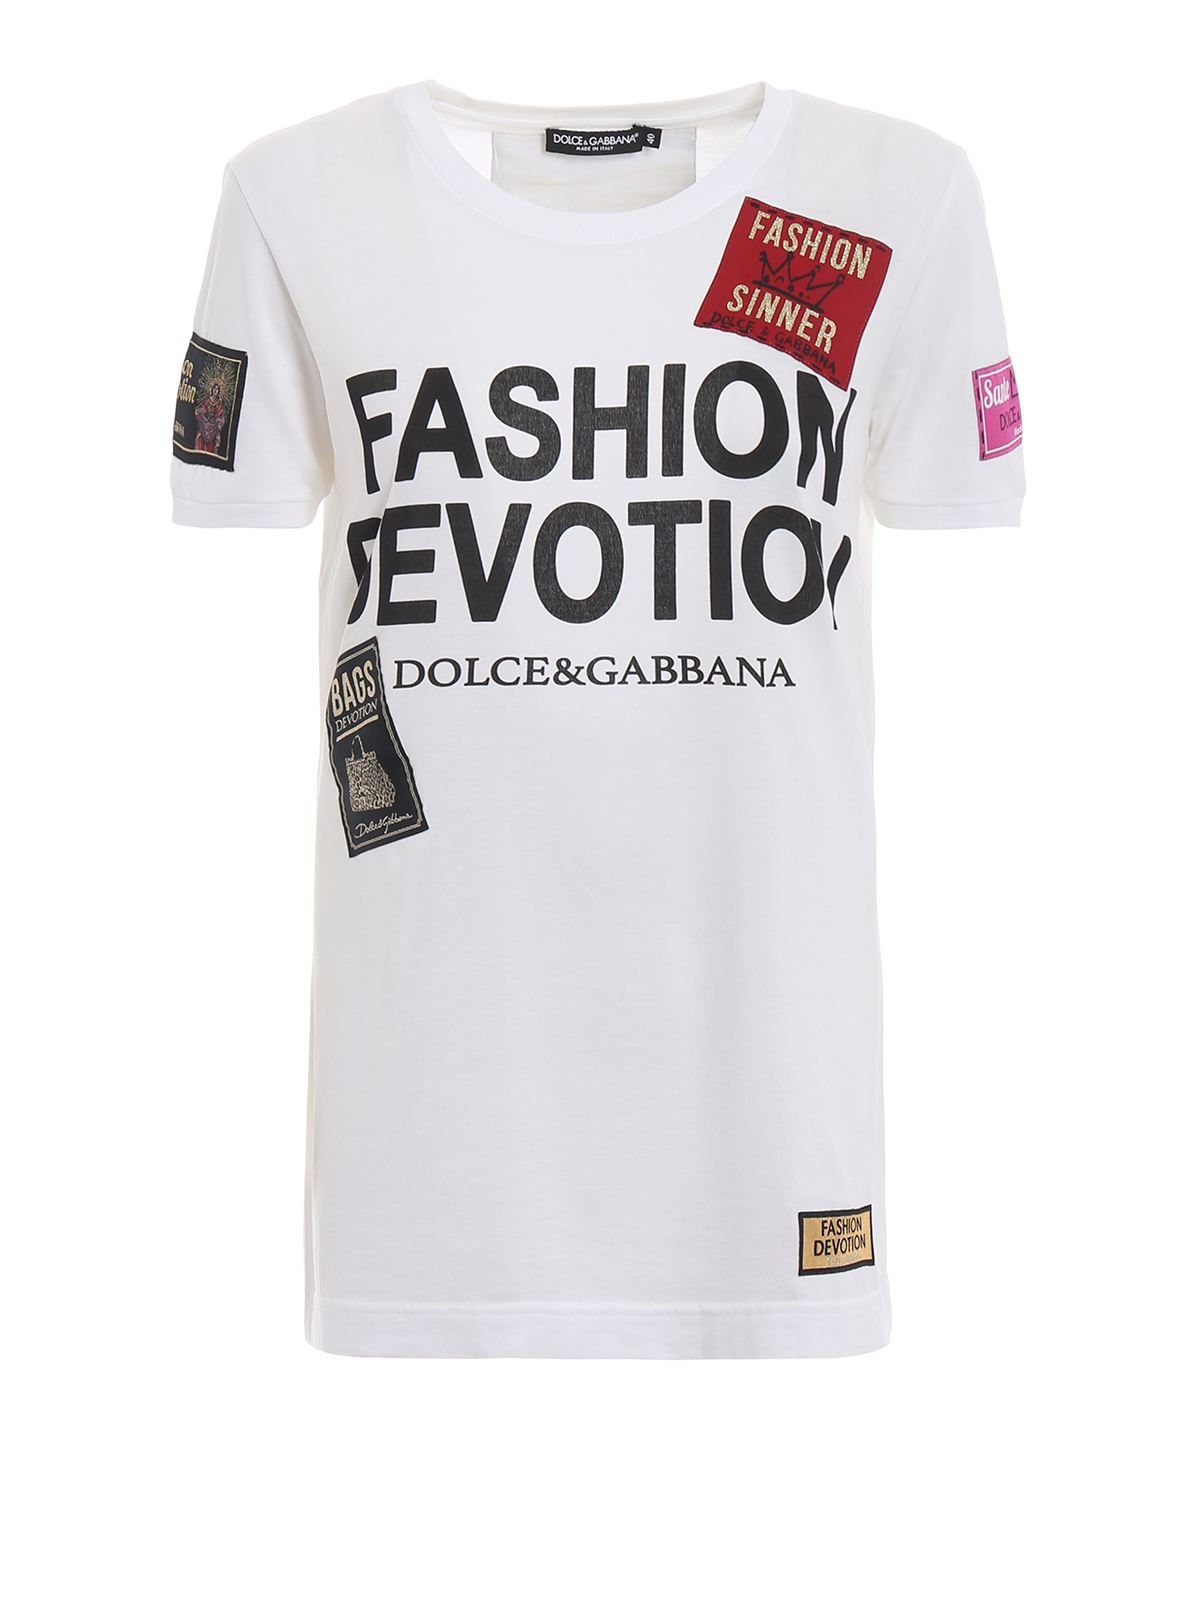 Dolce \u0026 Gabbana - Fashion Devotion 